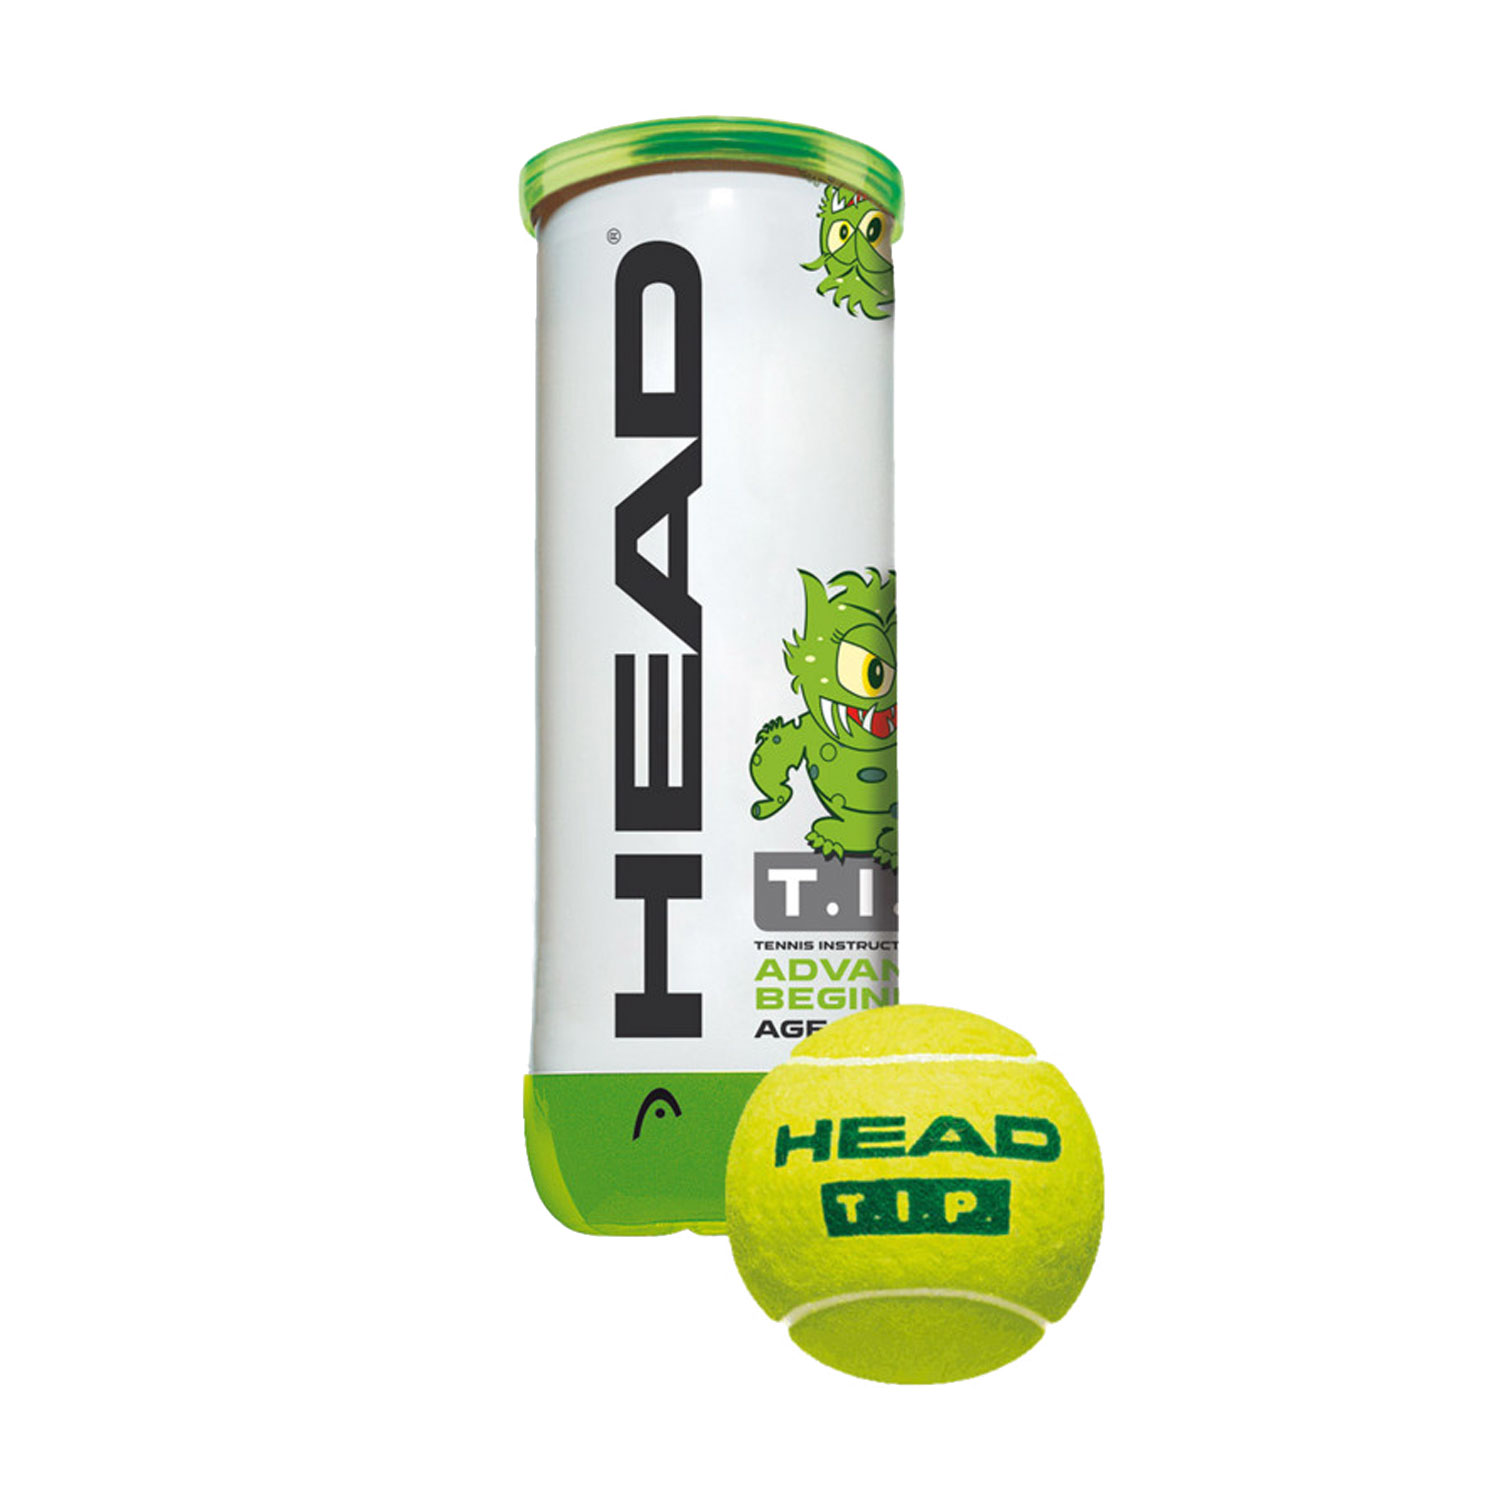 Head T.I.P Green - 3 Ball Can